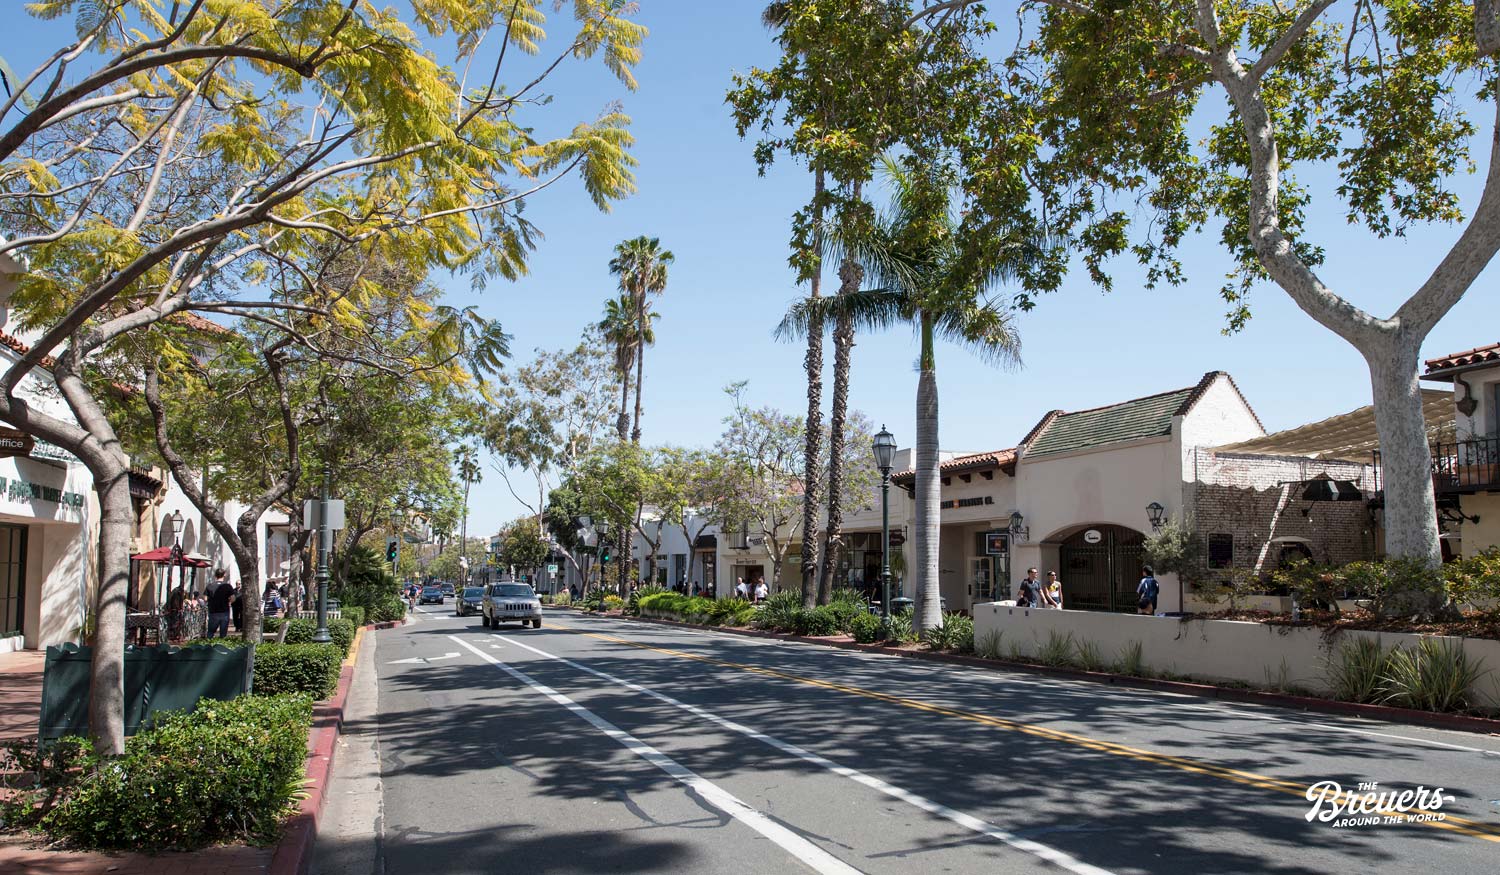 State Street in Santa Barbara am Highway 1